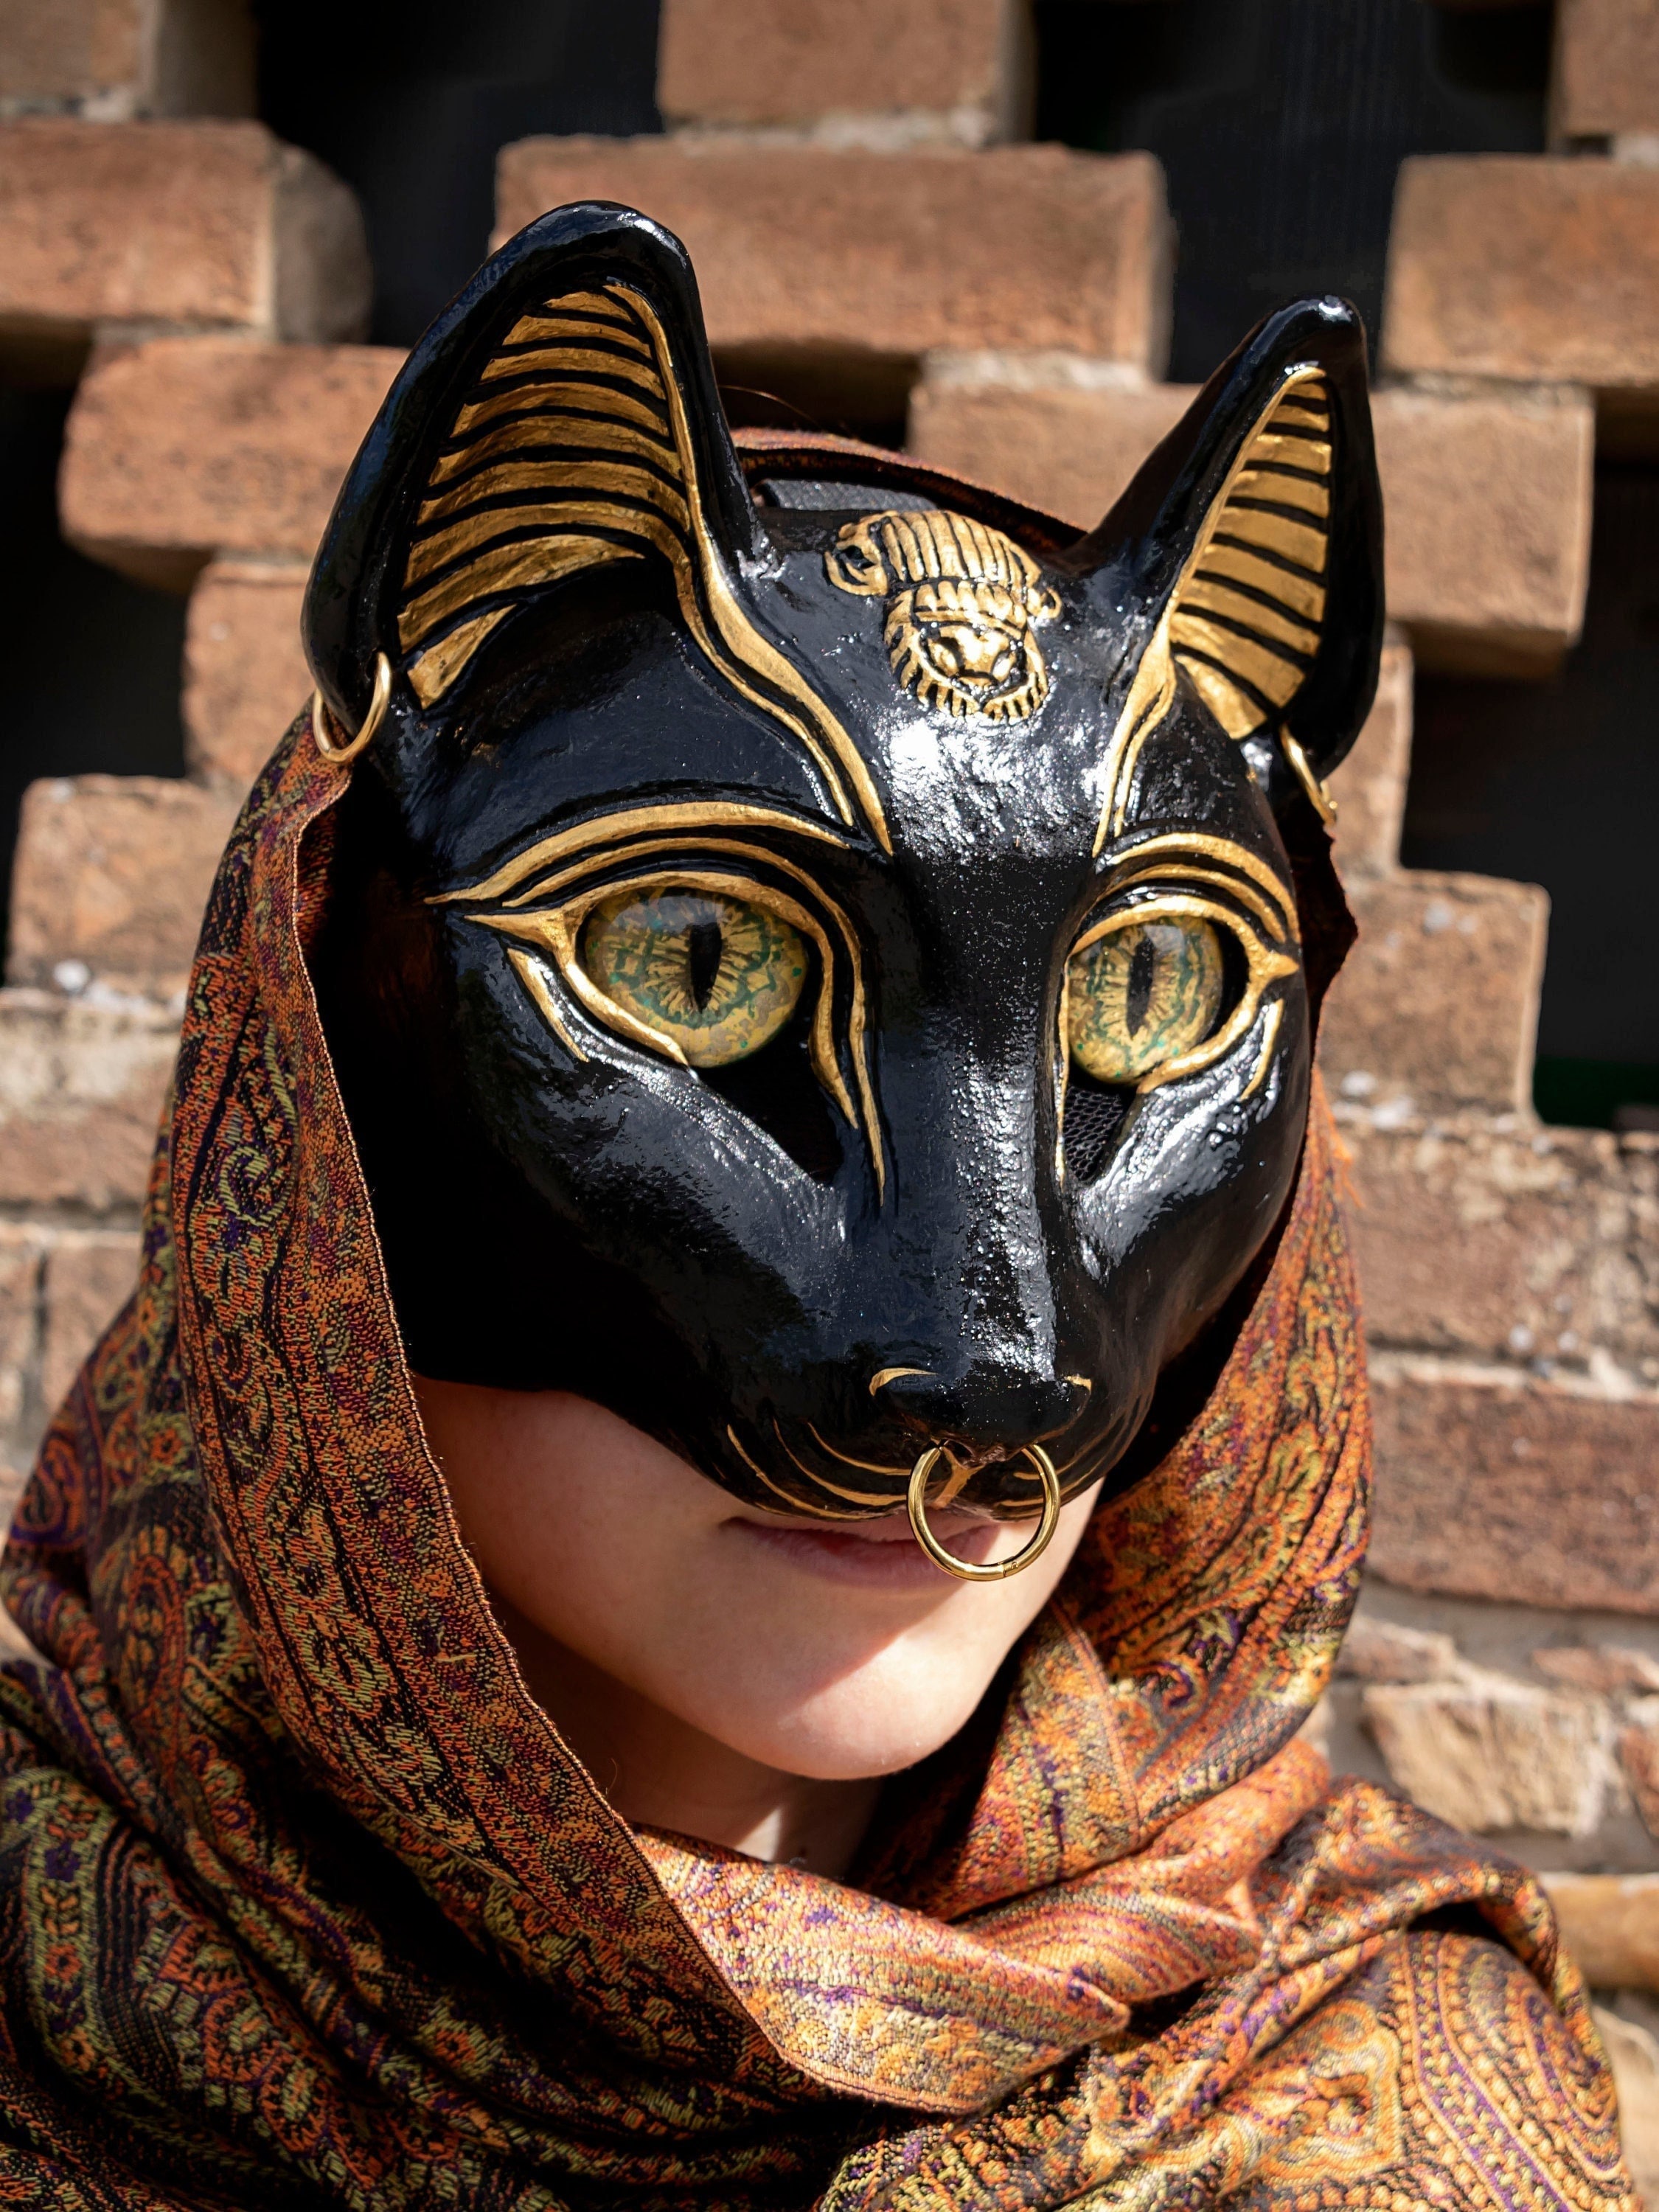 ancient egyptian cat masks